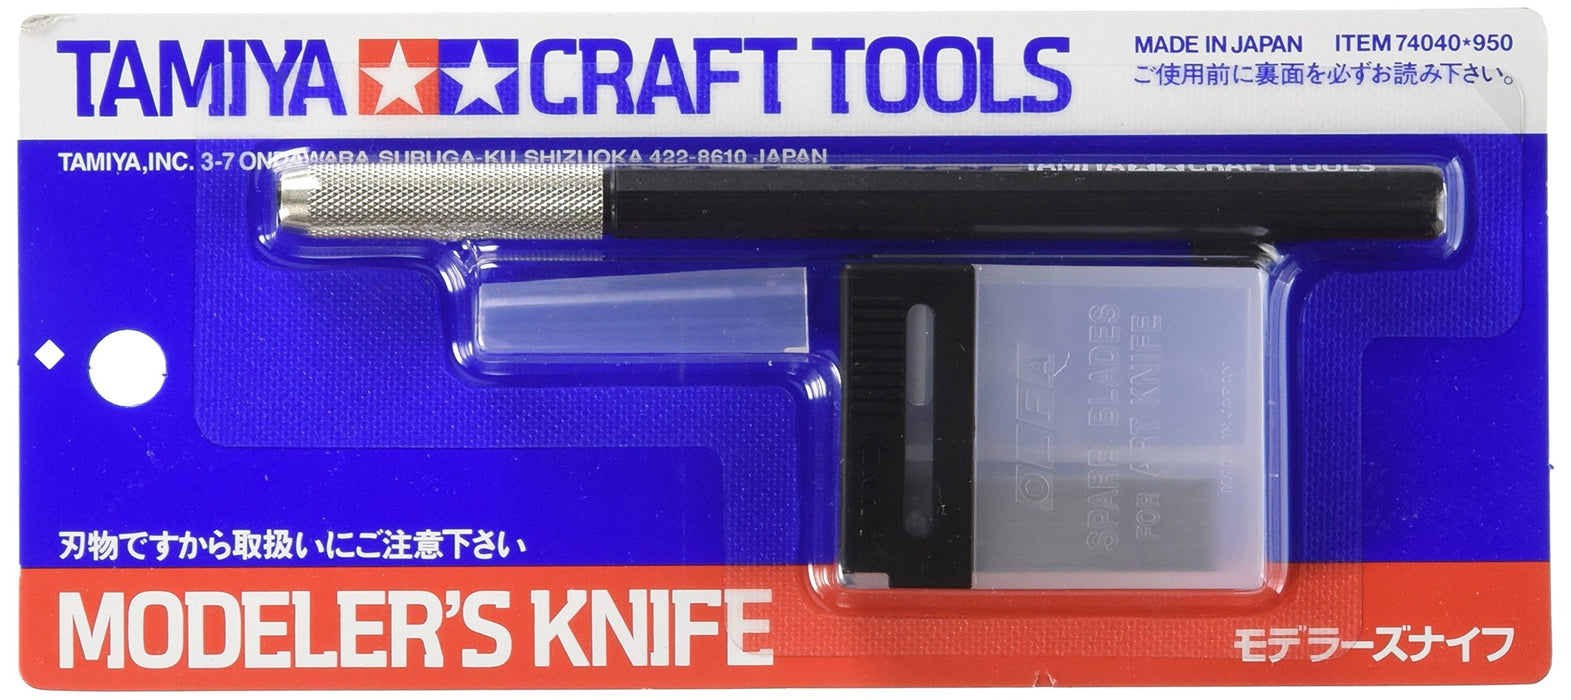 TAMIYA 74040 Craft Tools Modeler'S Knife